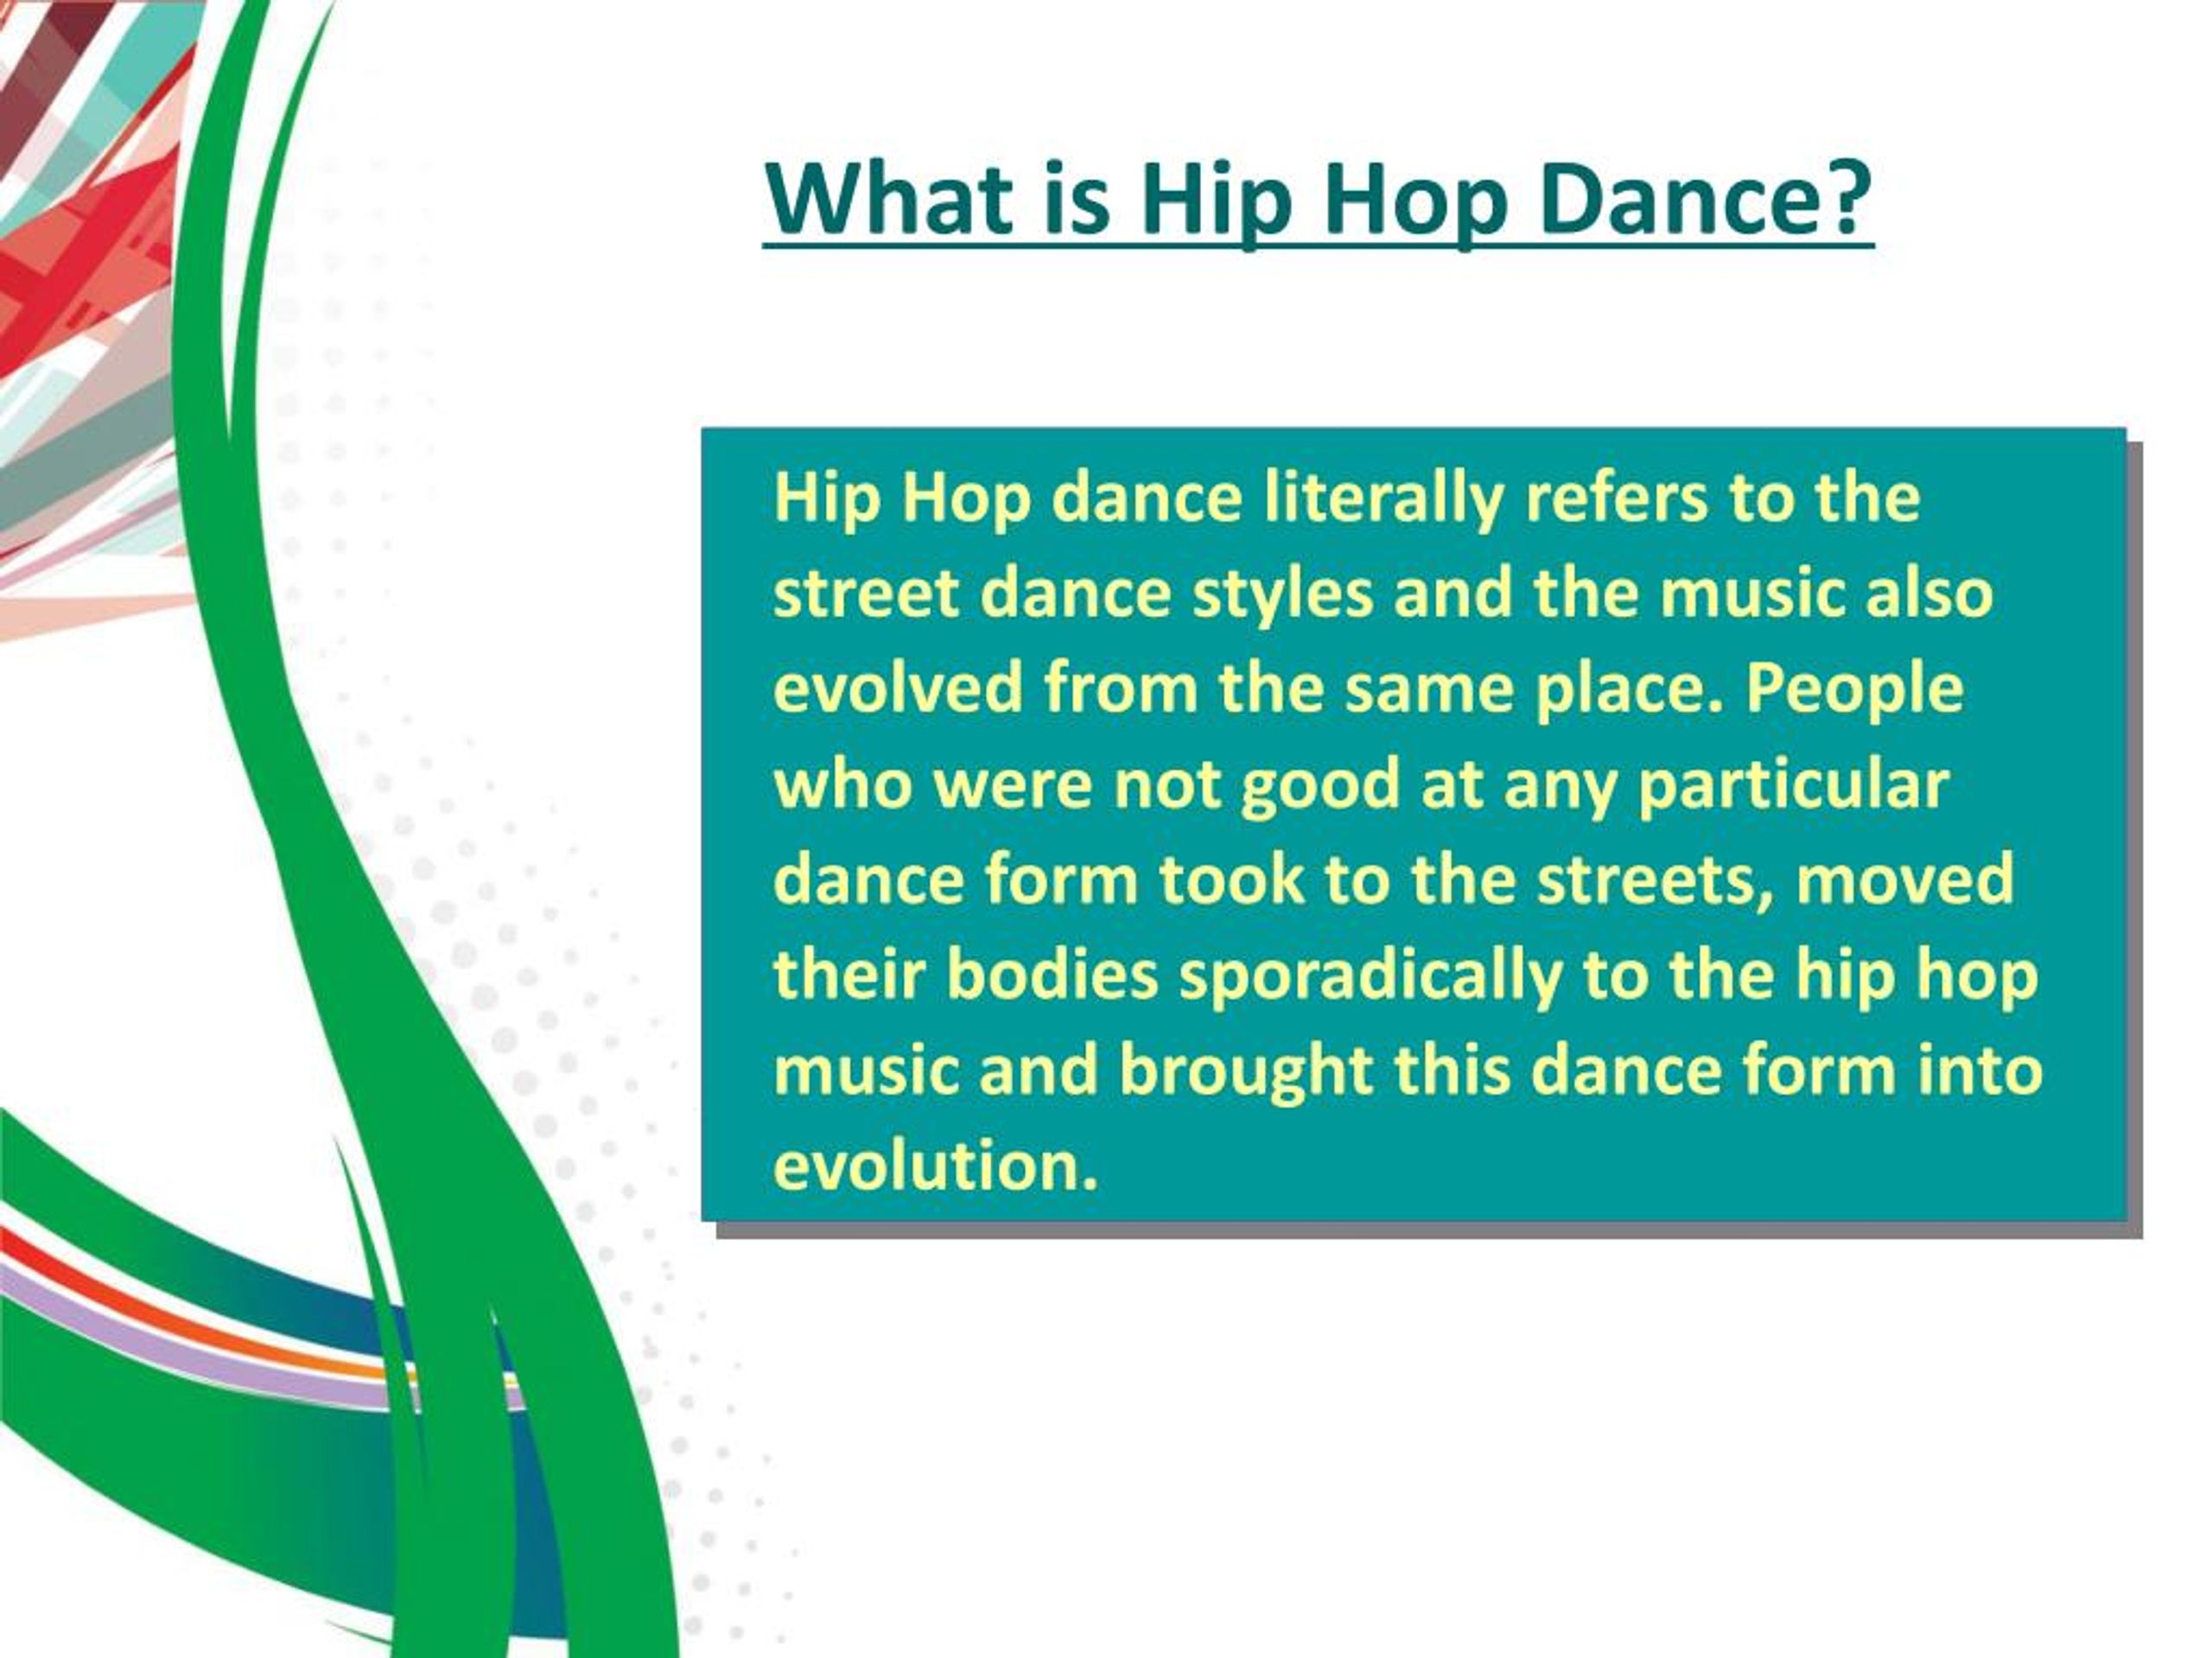 powerpoint presentation on hip hop dance